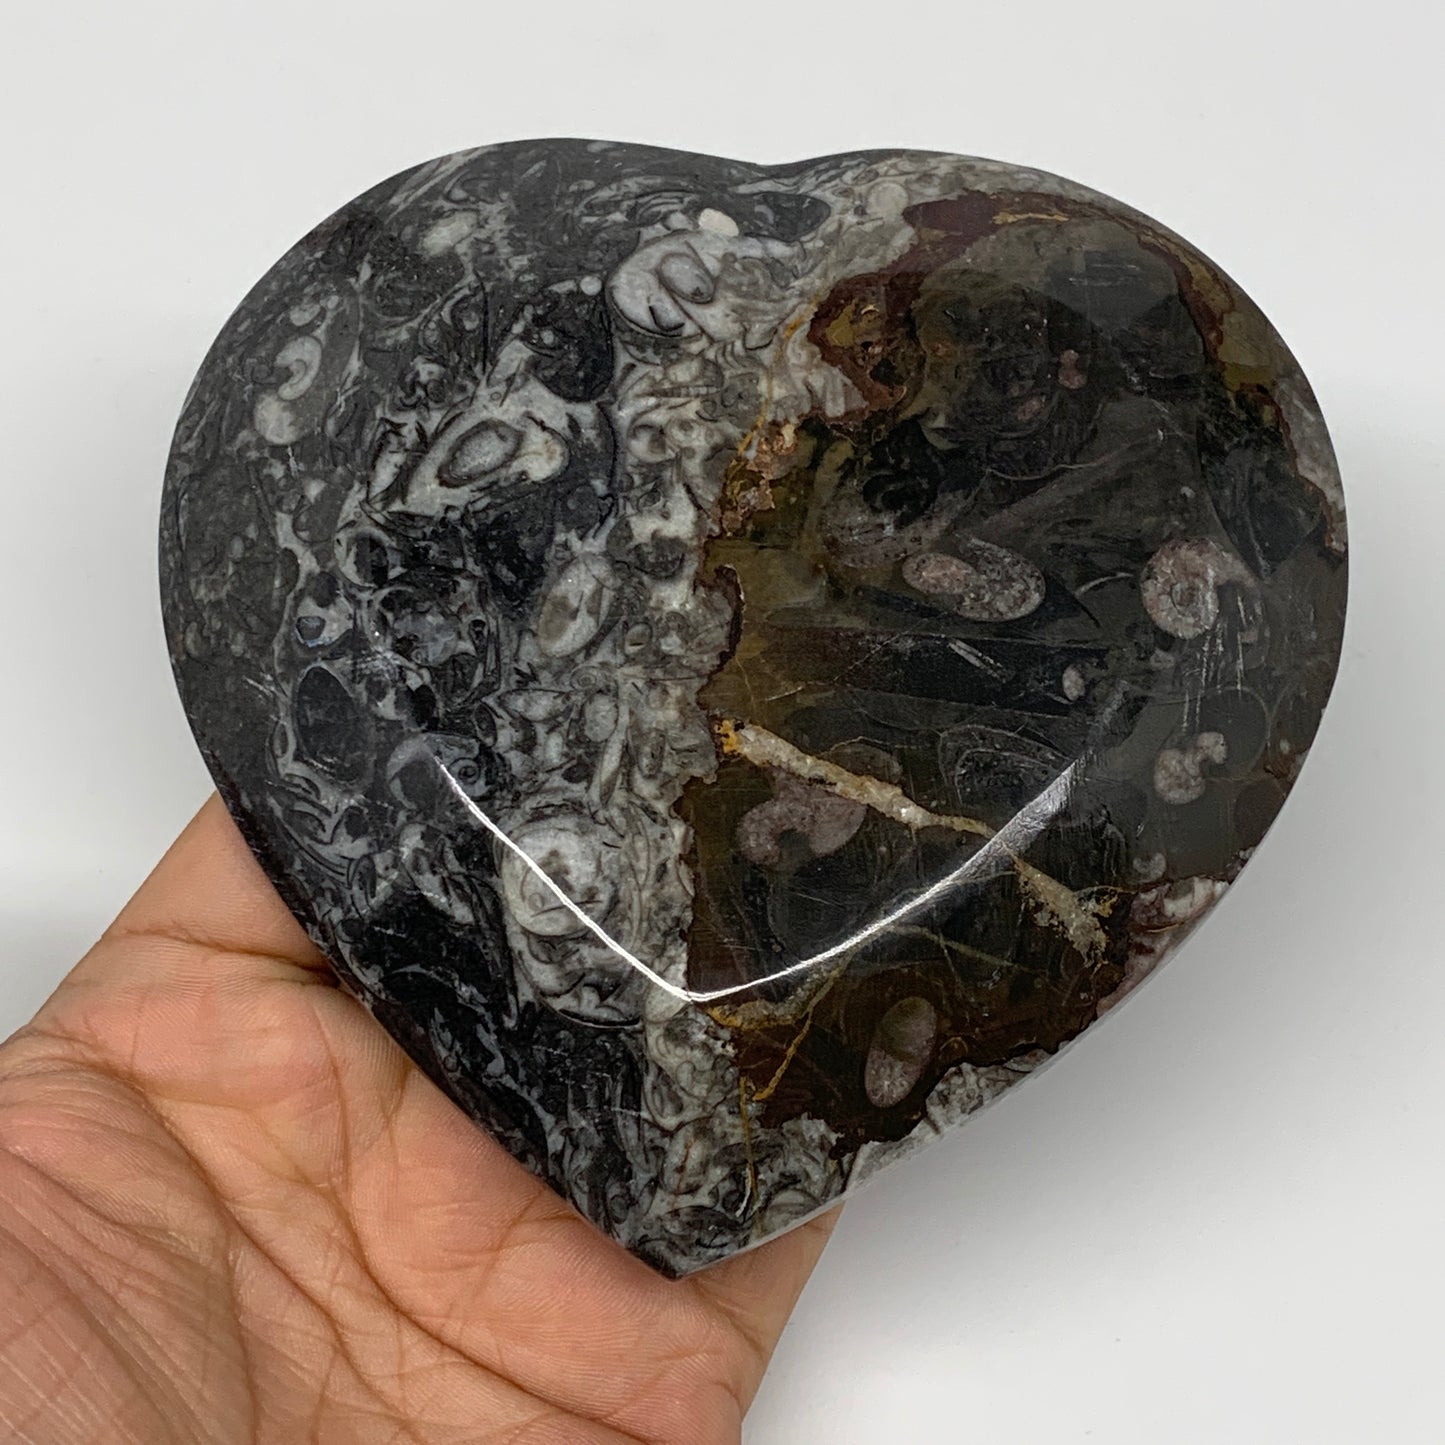 4Pcs, 4.8"x4.7" Small Heart Fossils Orthoceras Ammonite Bowls @Morocco, B8791